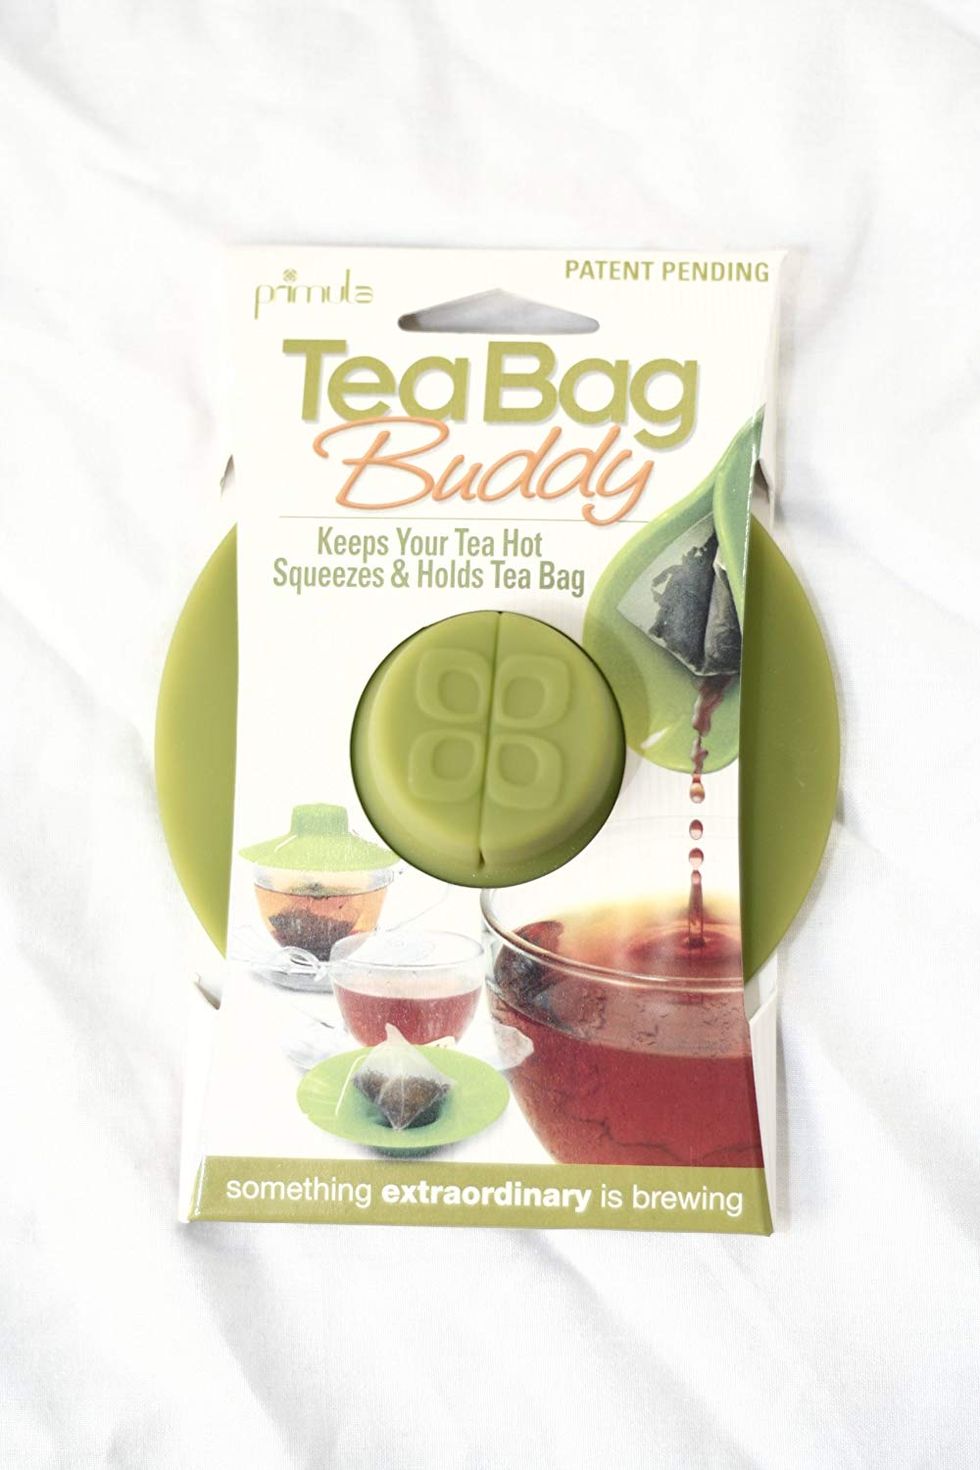 Primula Green Tea Bag Buddy Squeezes & Holds Teabag, Keeps TEA